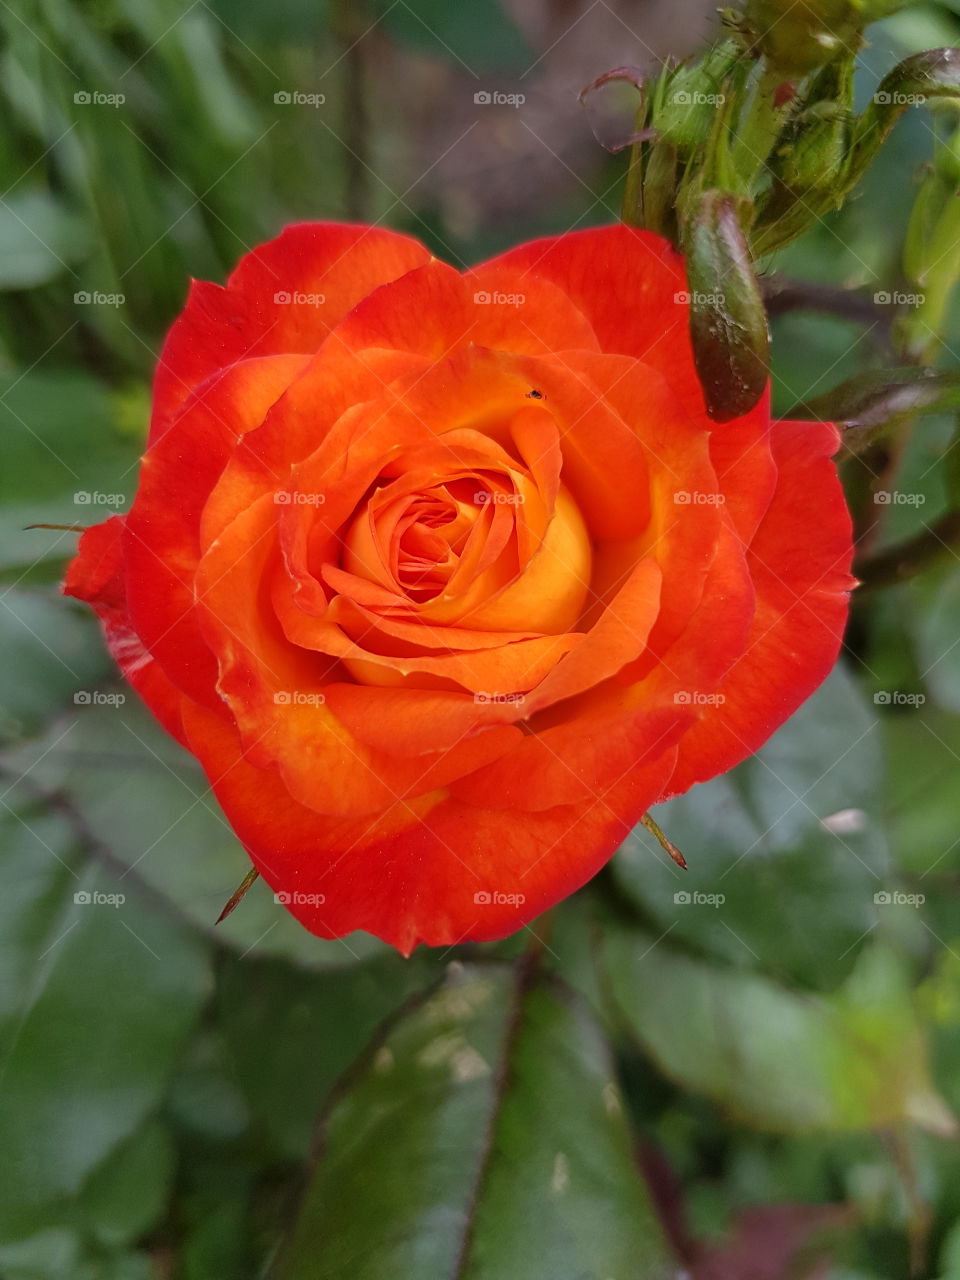 A rose in bloom